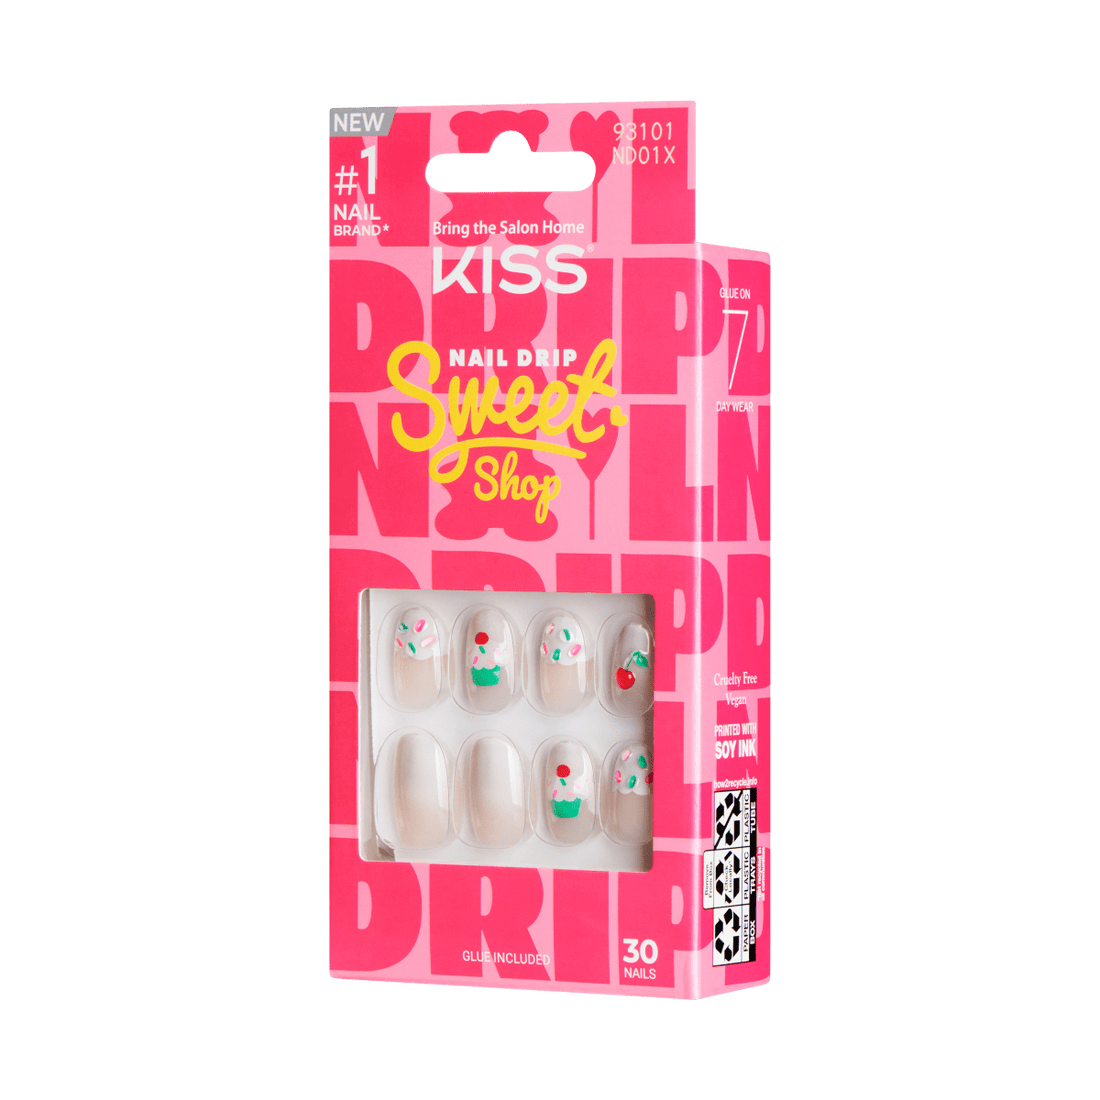 KISS Nail Drip ‘Sweet Shop’ Press-On Glue Nails – Hot Drip